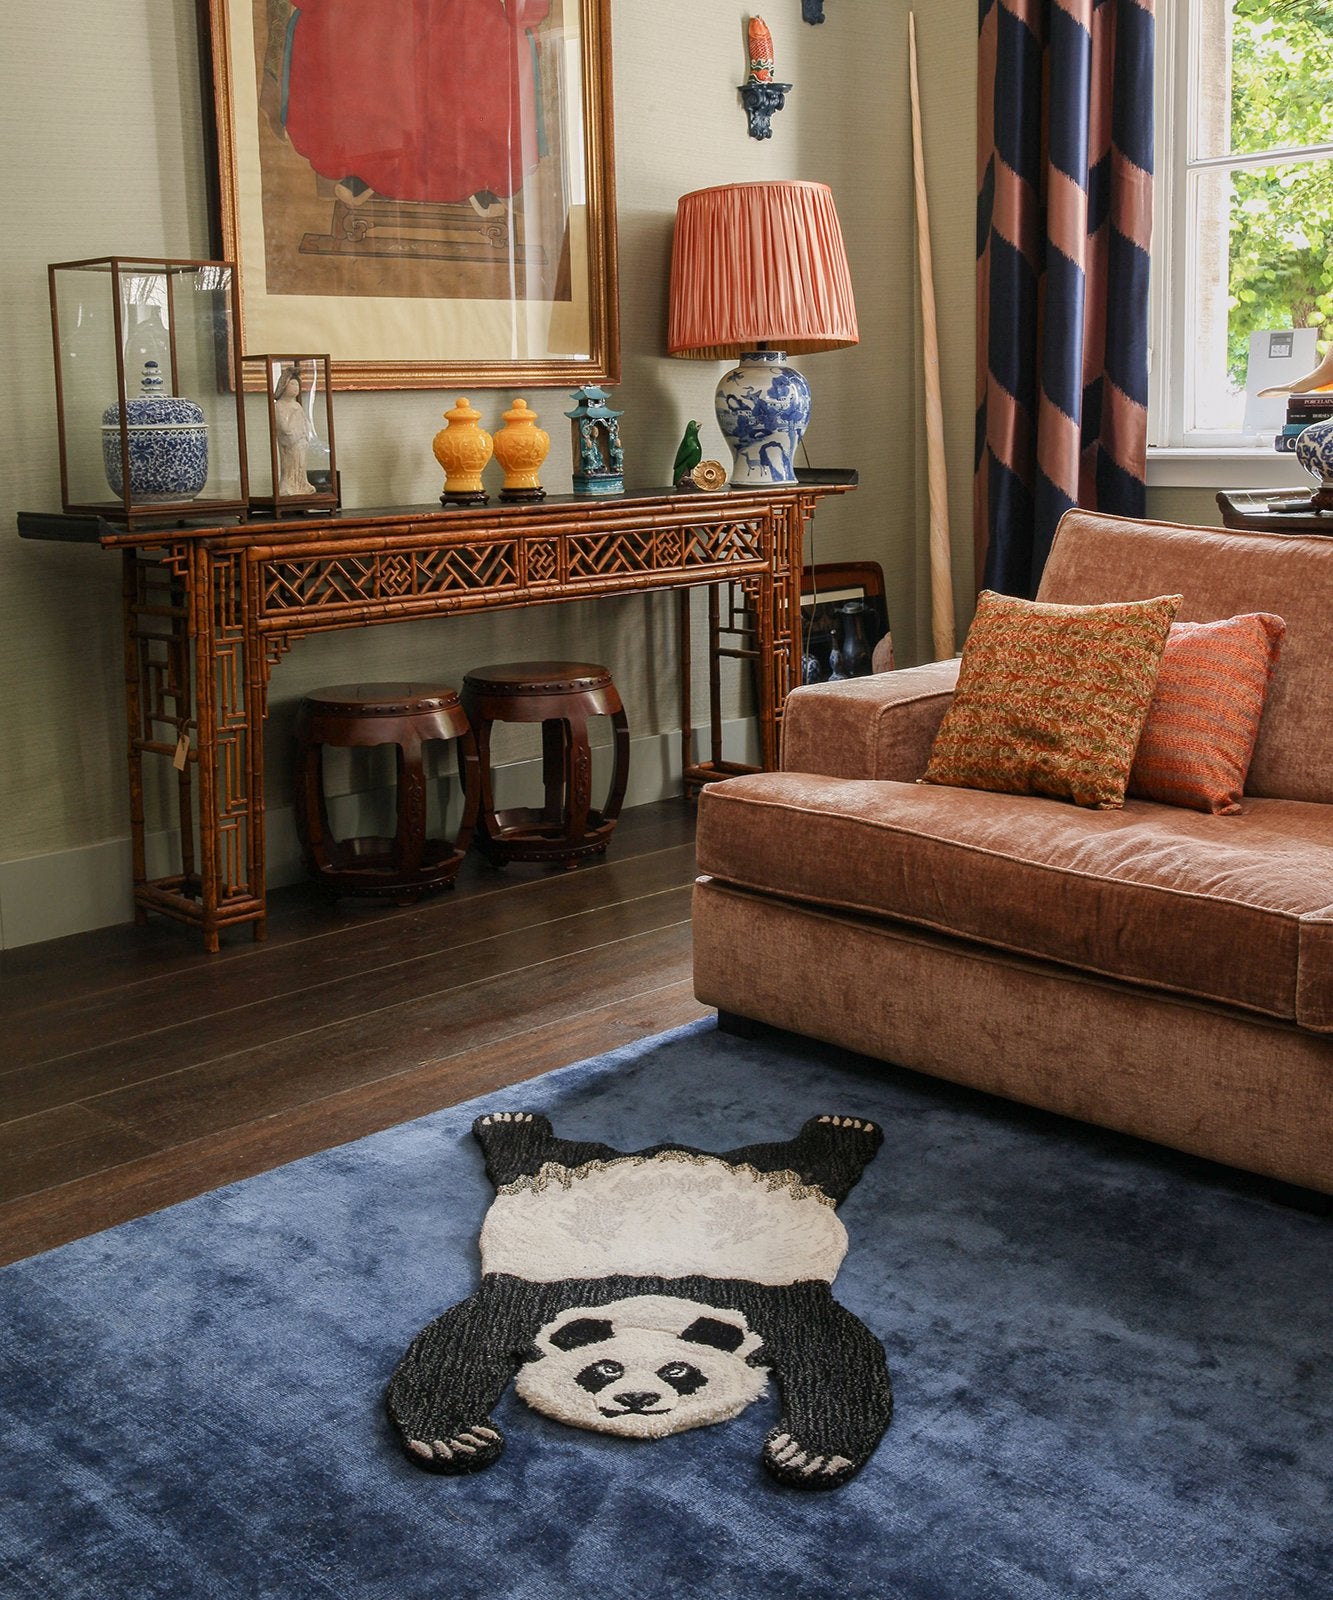 plumpy-panda-rug-small-doing-goods-vdven-1.45.10.051.020.3-web.jpg